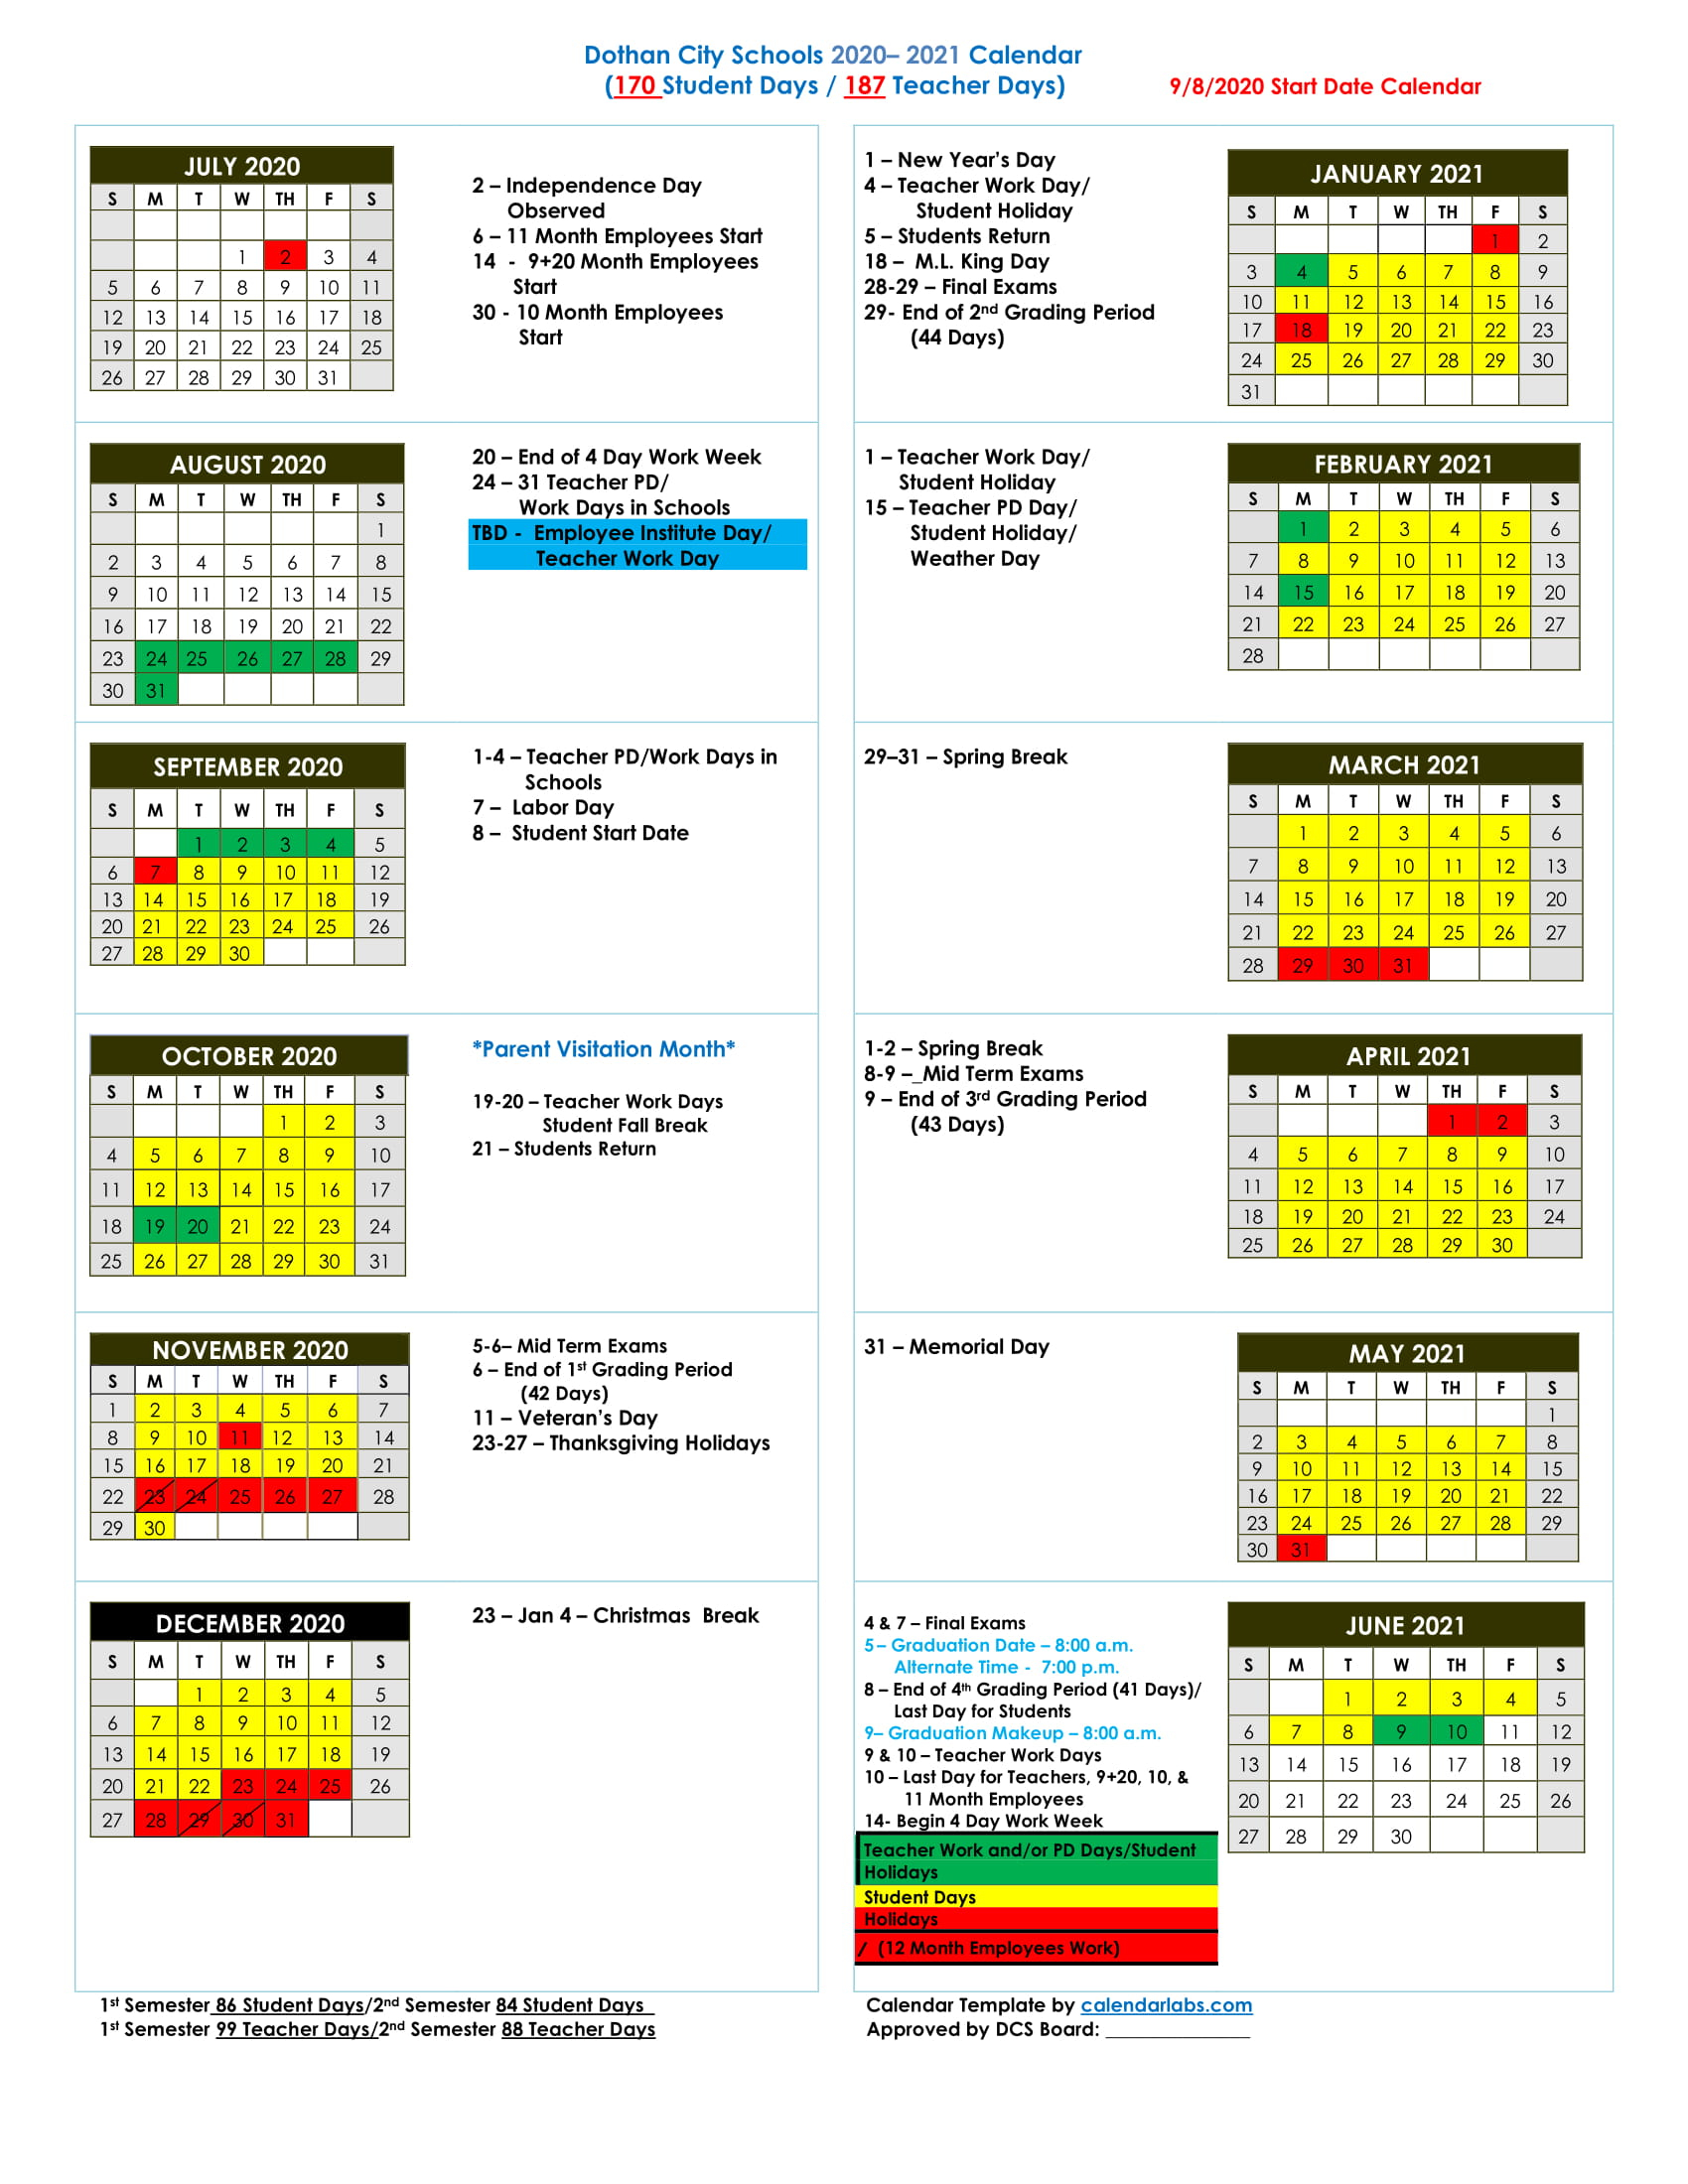 purdue-university-global-academic-calendar-2023-academiccalendars